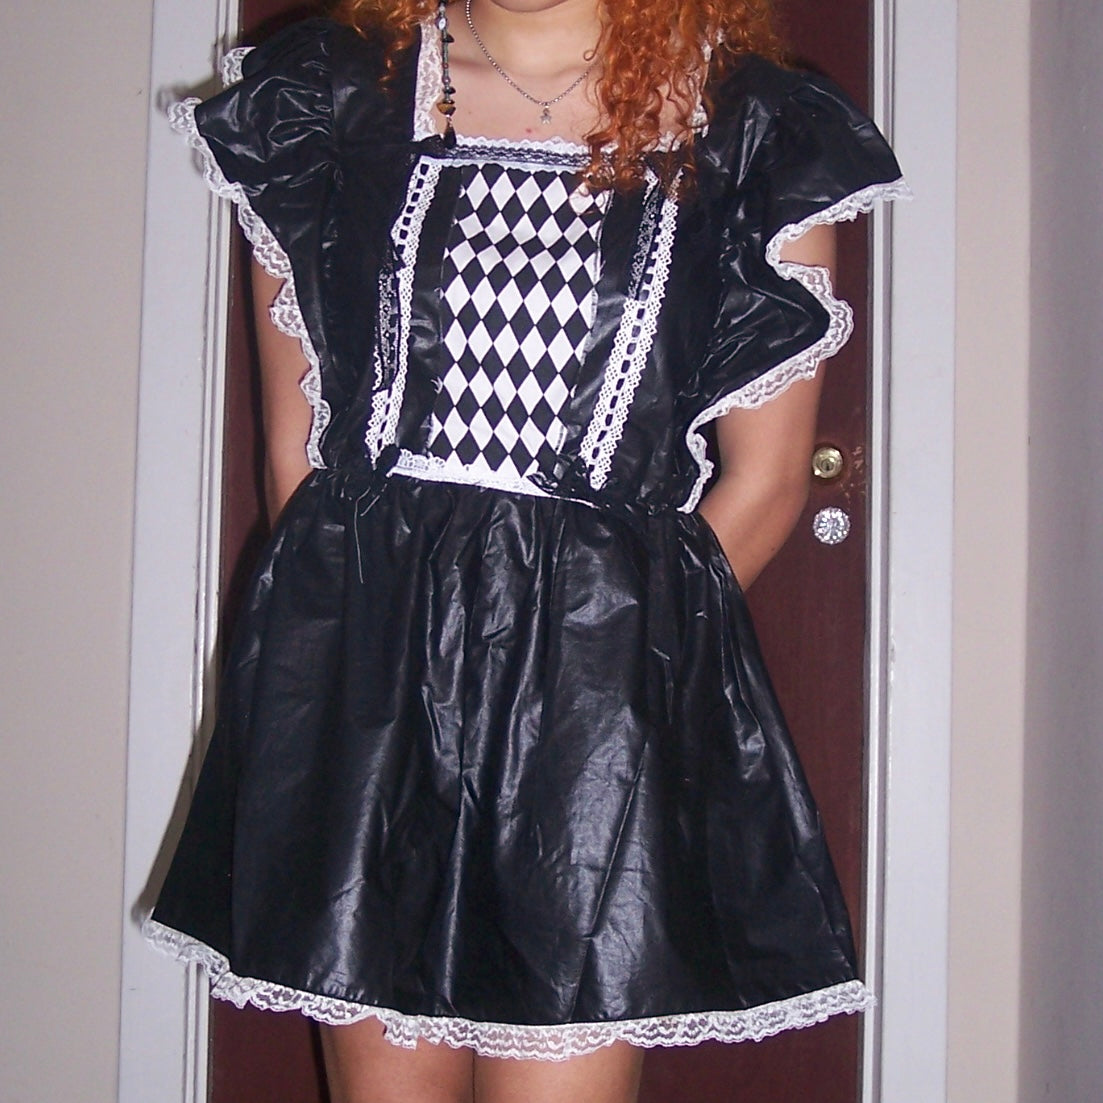 creepy doll dress size medium